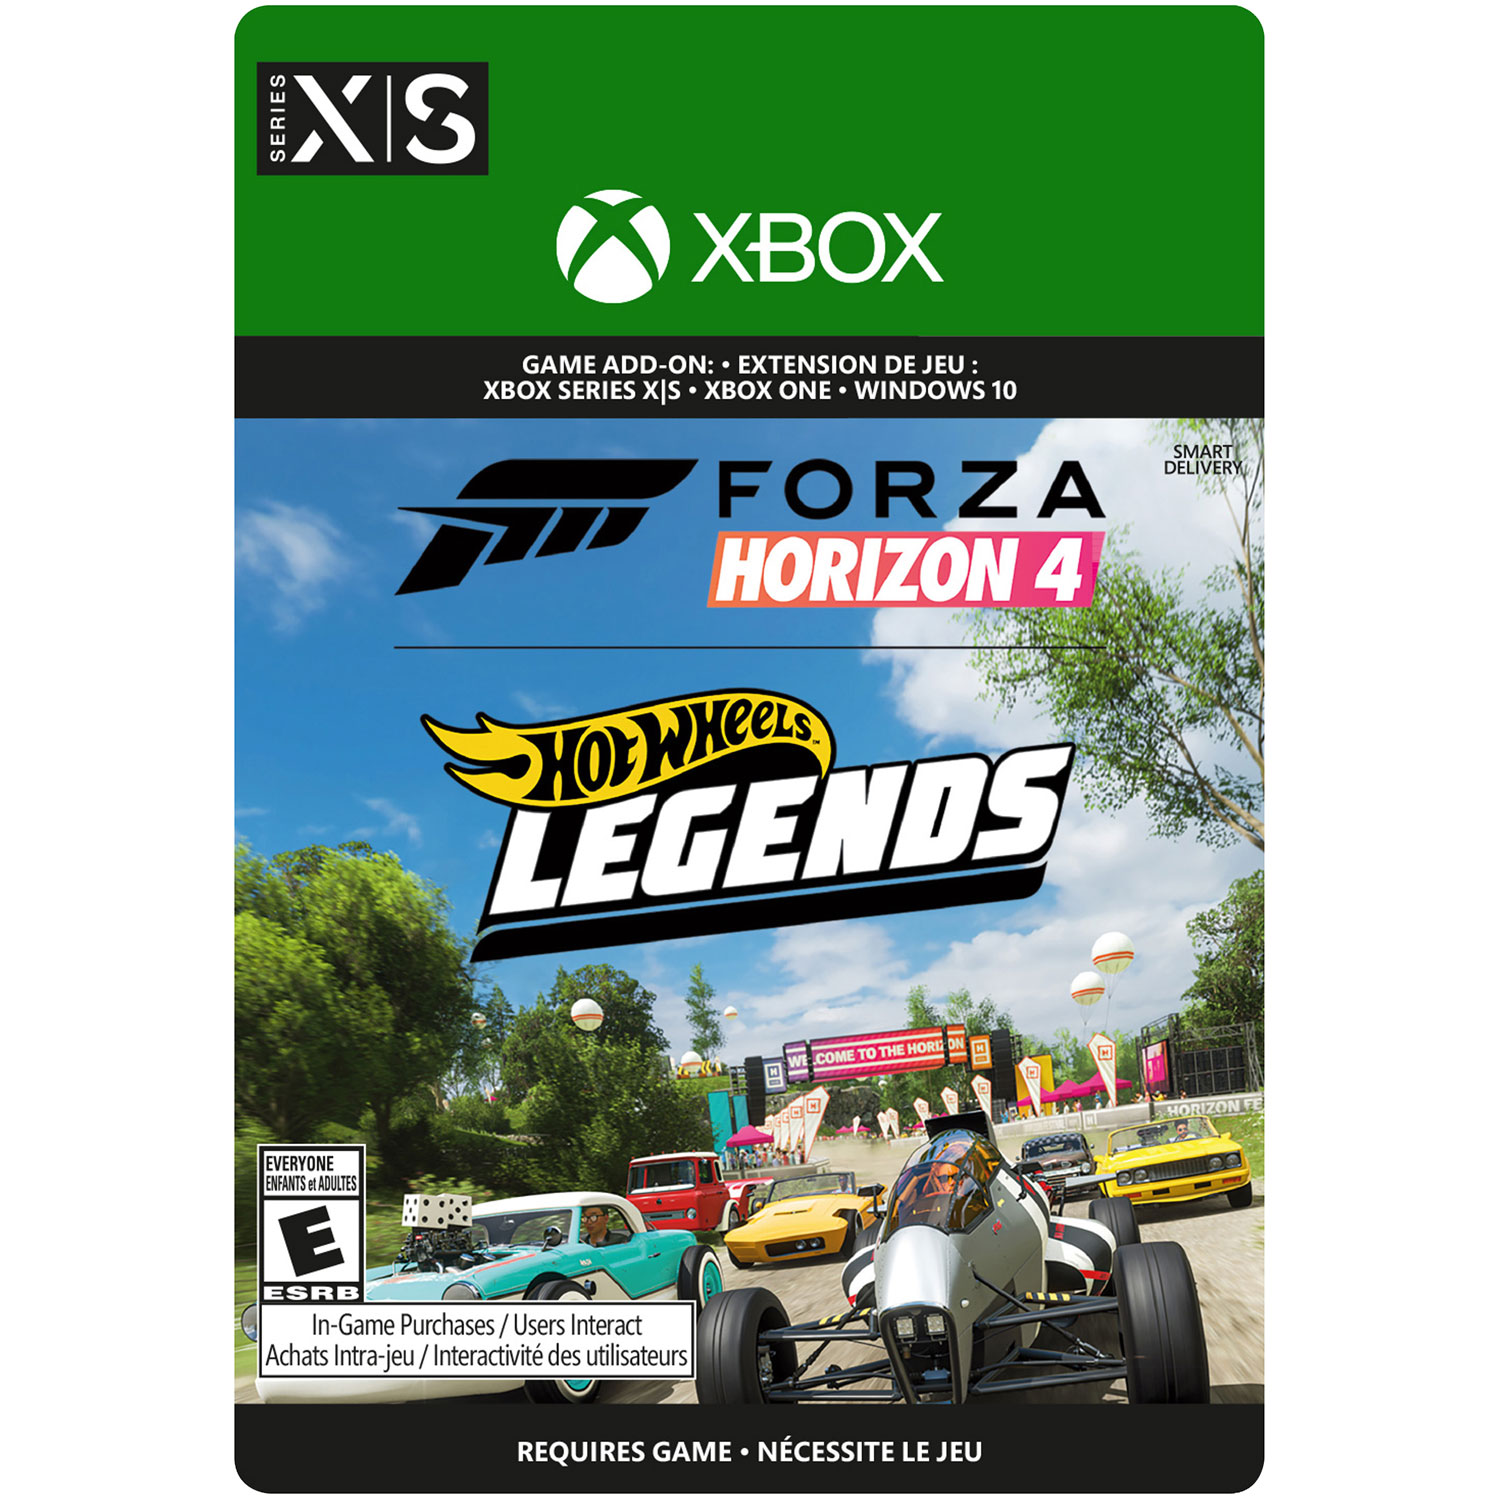 Forza Horizon 4: Hot Wheels Legends Add-On (Xbox Series X|S / Xbox One / Win 10) - Digital Download